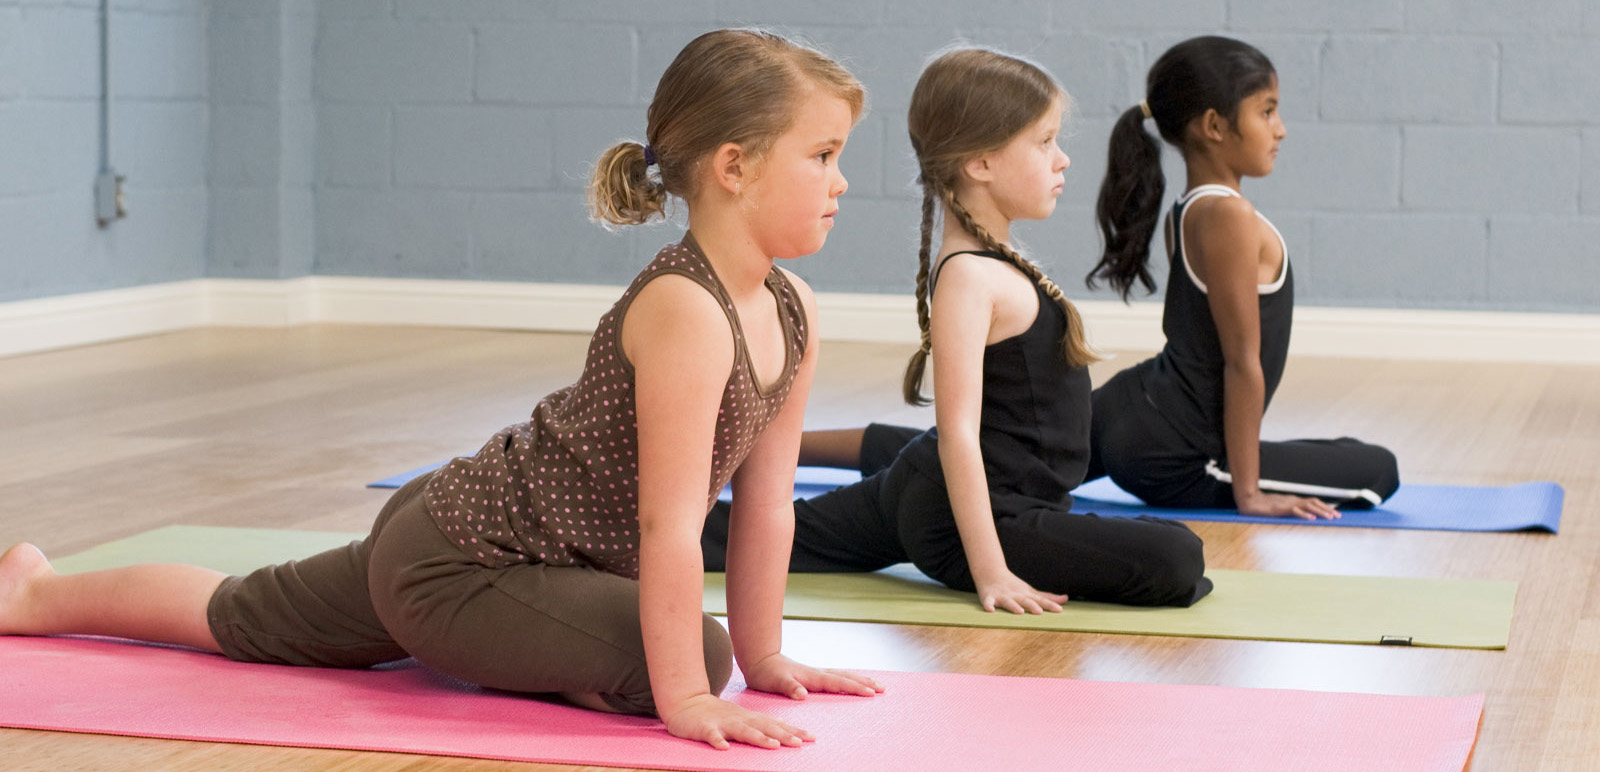 Yoga Poses For 3 Kids